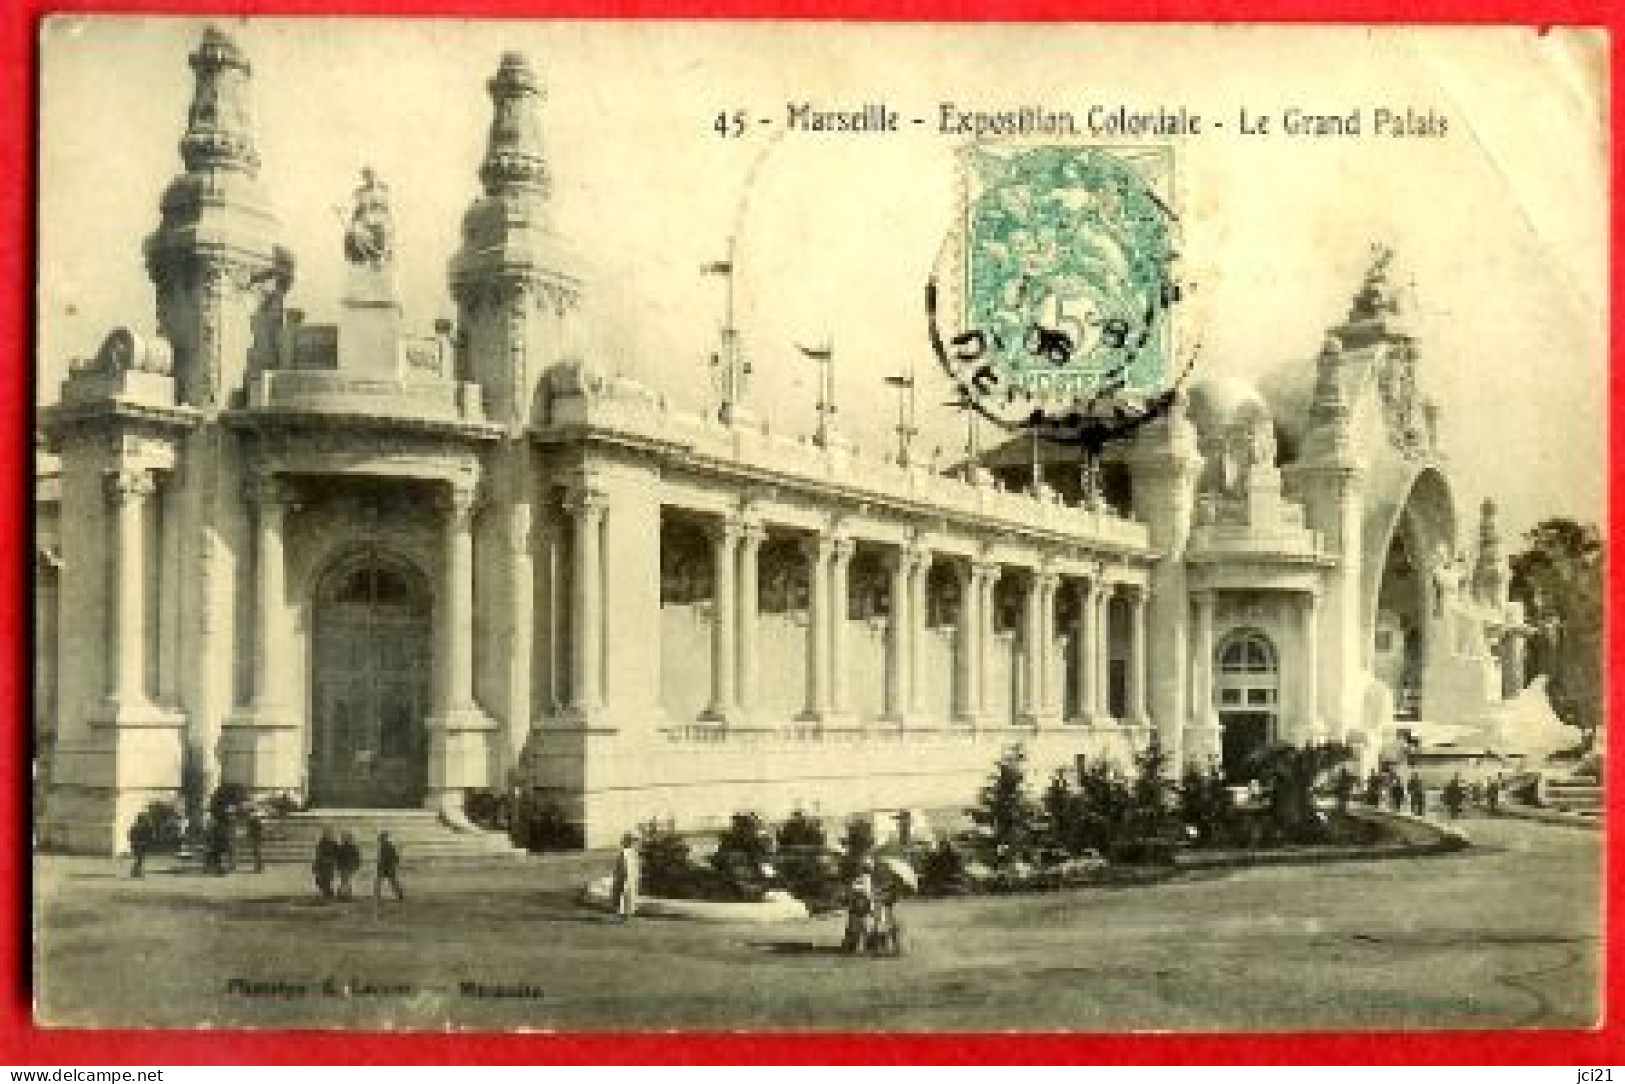 13 - MARSEILLE - EXPOSITION COLONIALE - LE GRAND PALAIS - CPA ANIMÉE (337)_CP70 - Kolonialausstellungen 1906 - 1922